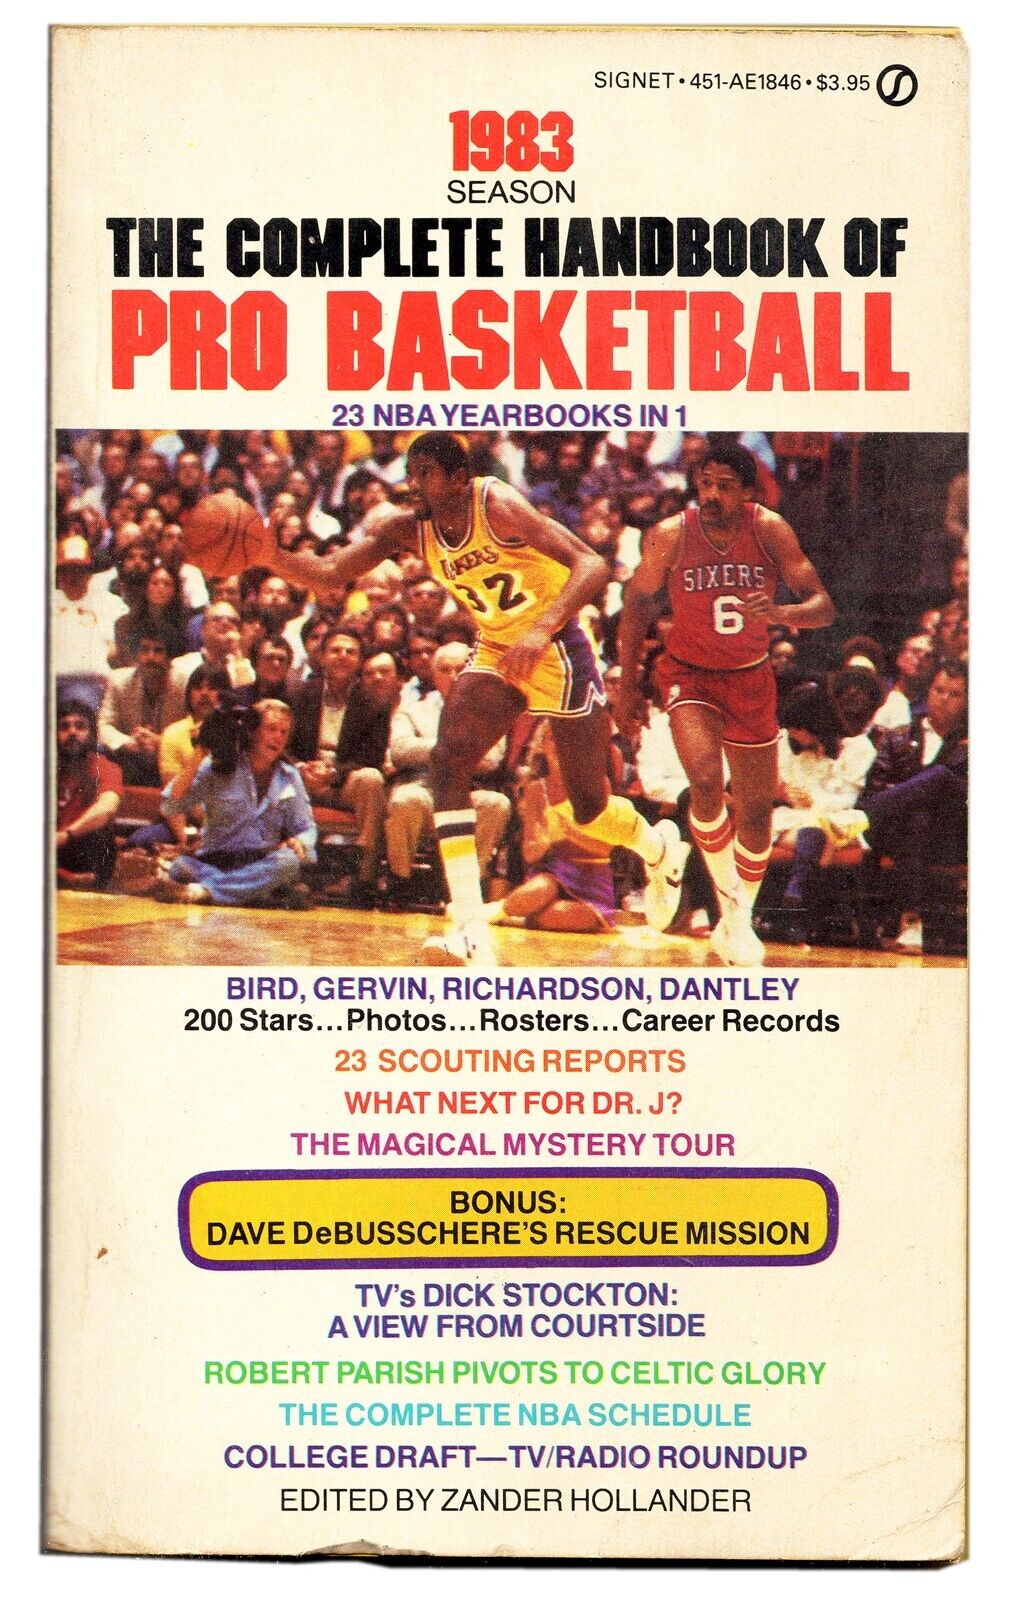 ORIGINAL Vintage 1983 Complete Handbook of Pro Basketball Hollander Magic